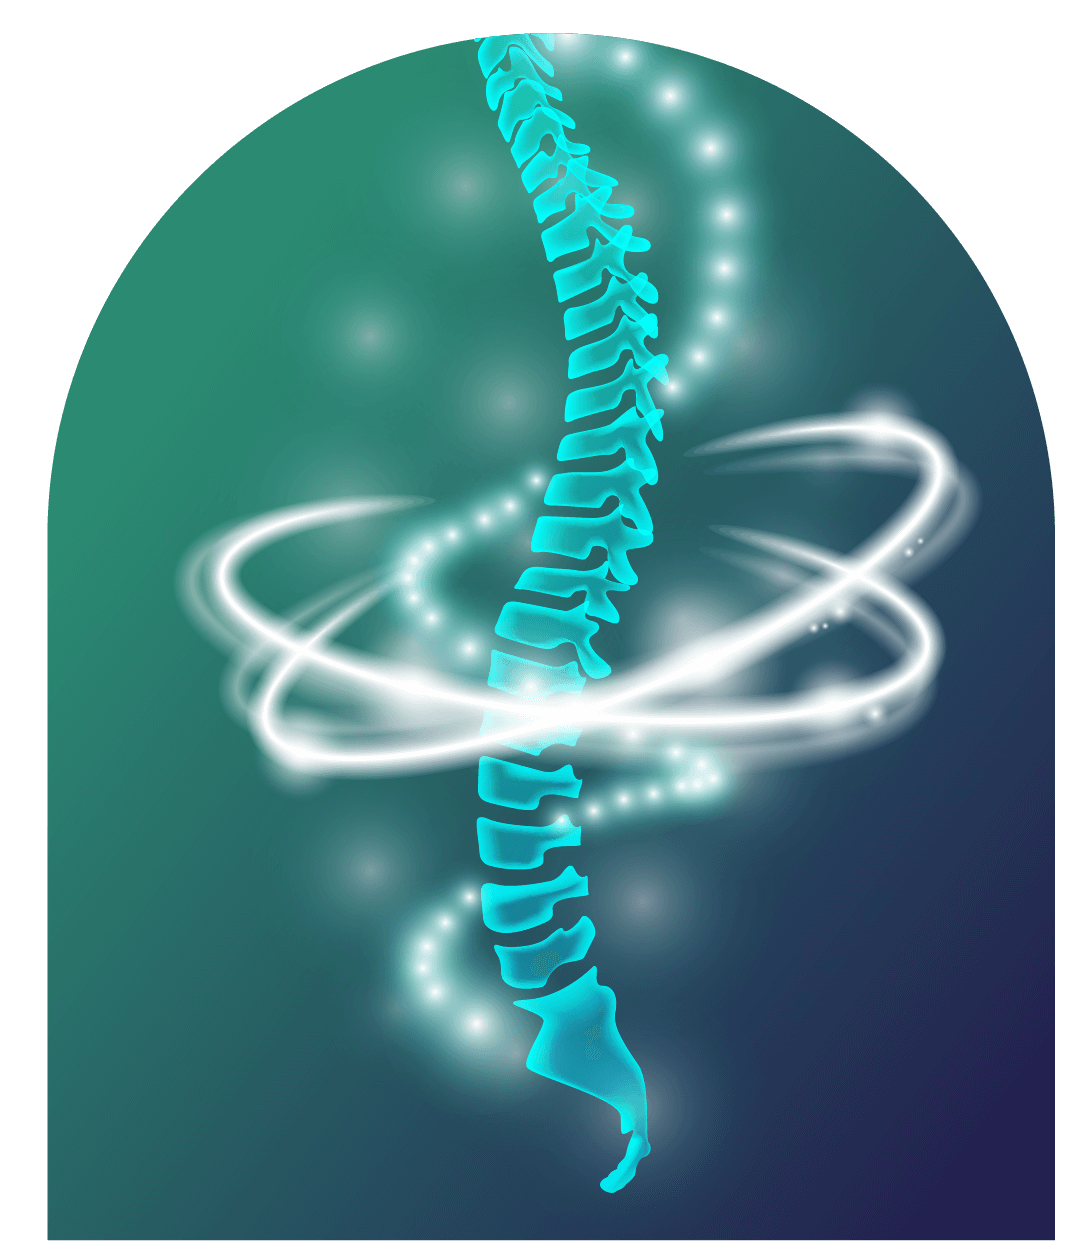 Spine alignment